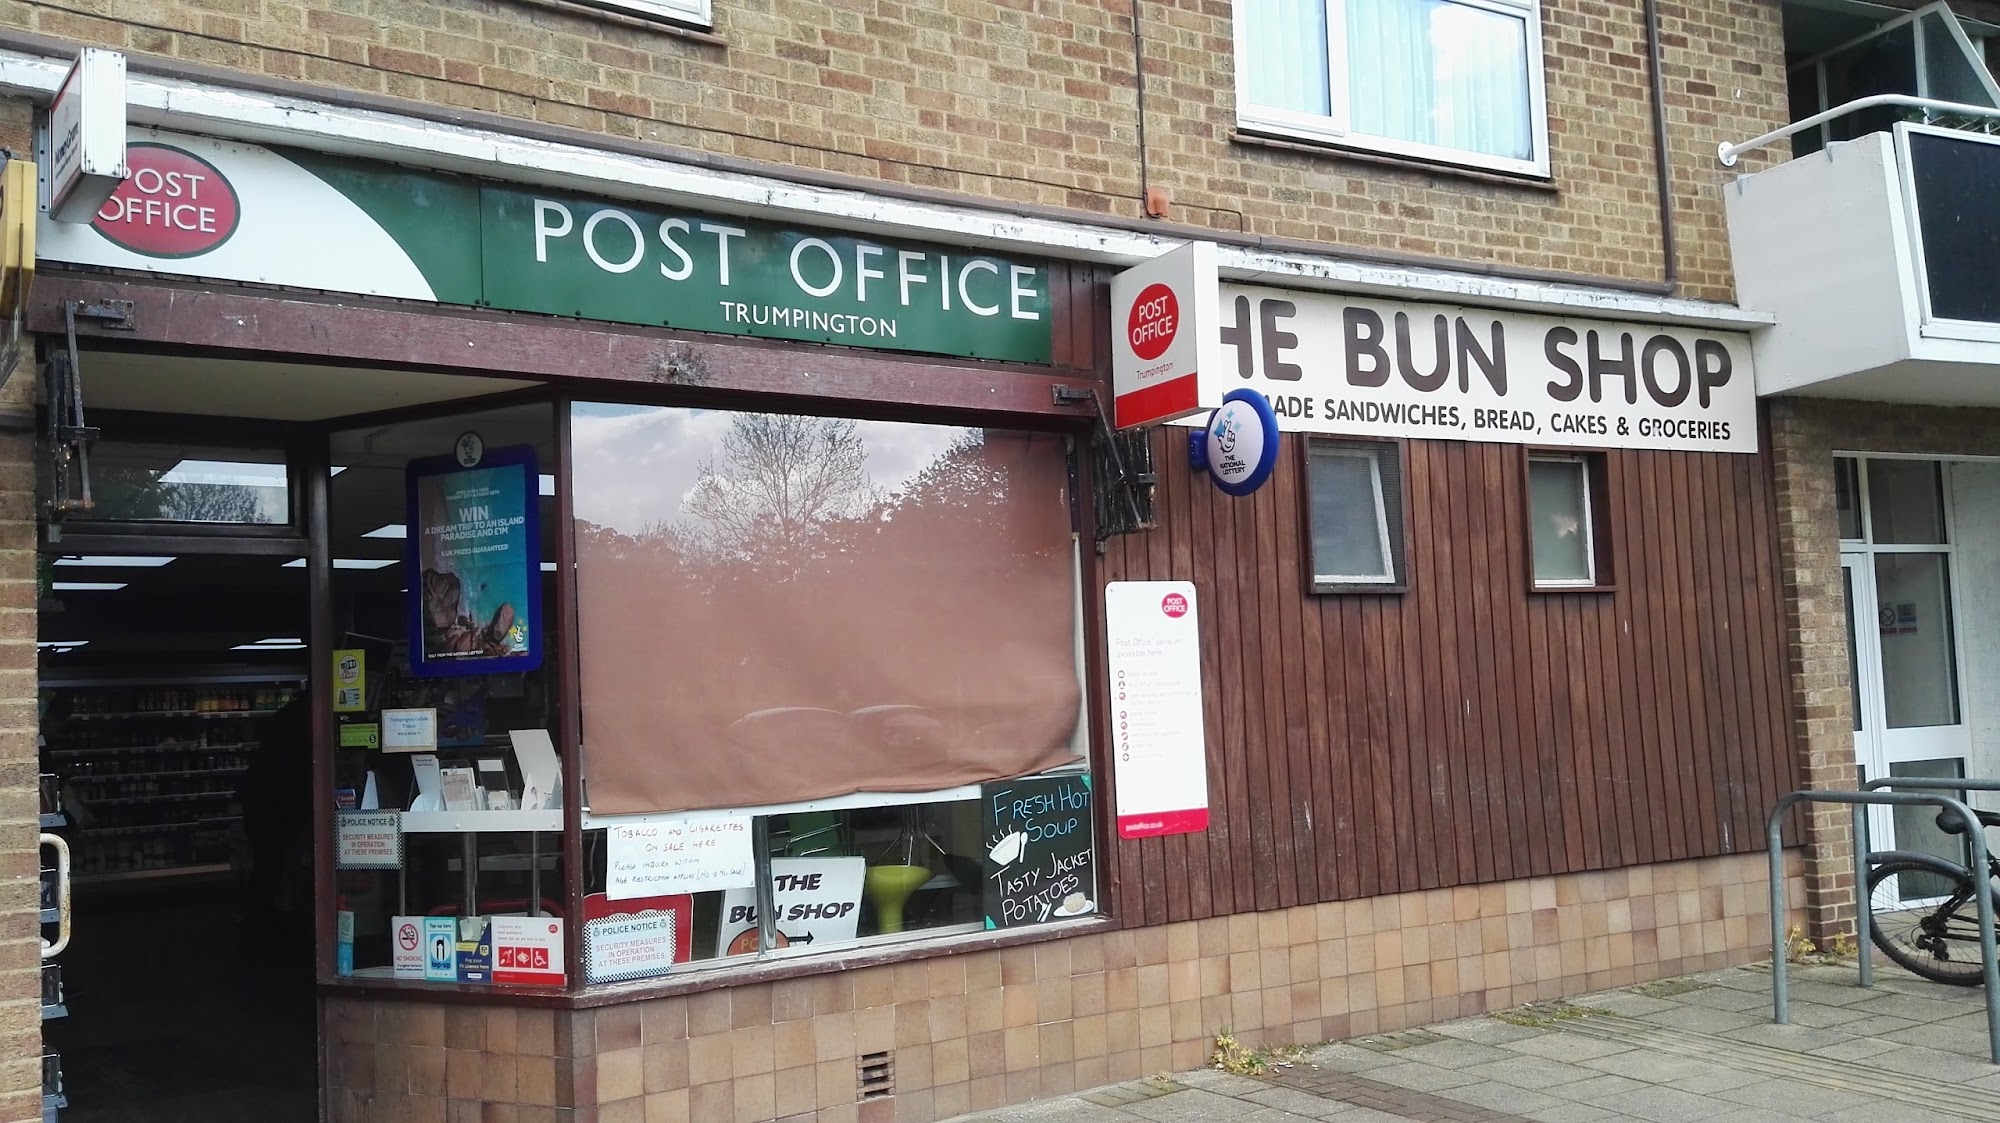 The Bun Shop (Trumpington Post Office)